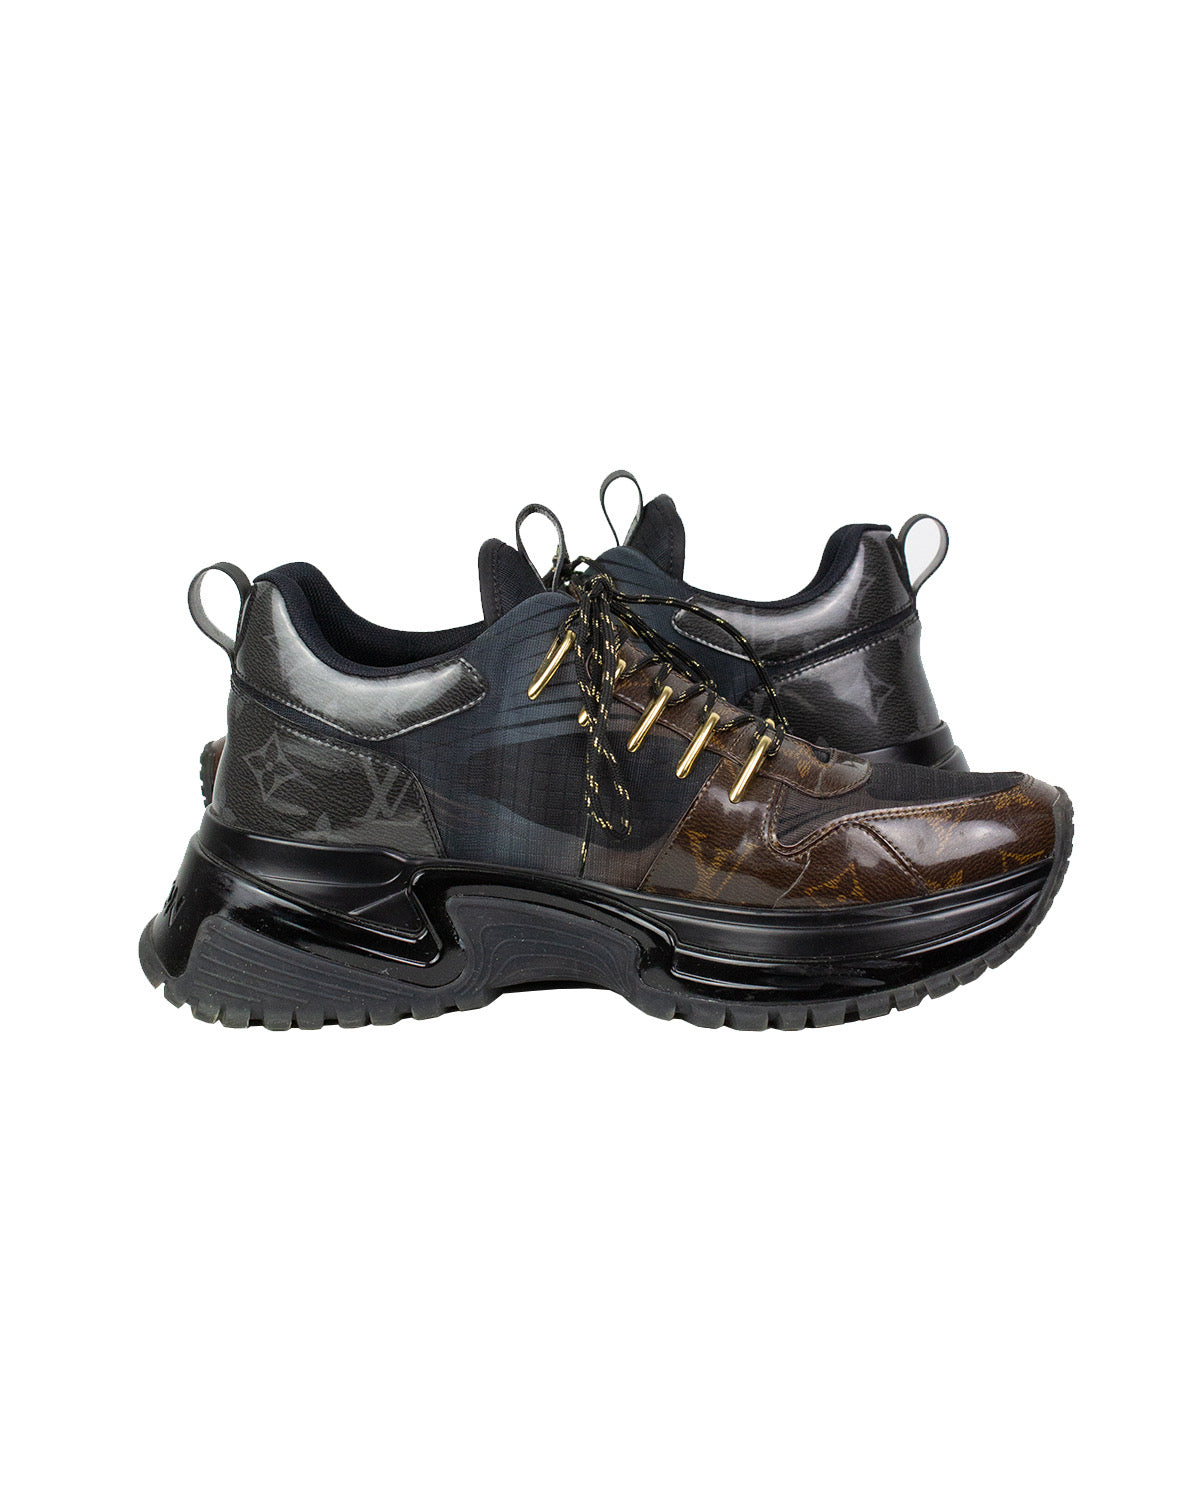 EPPLI, LOUIS VUITTON sneakers 'RUN AWAY', size 38.5.